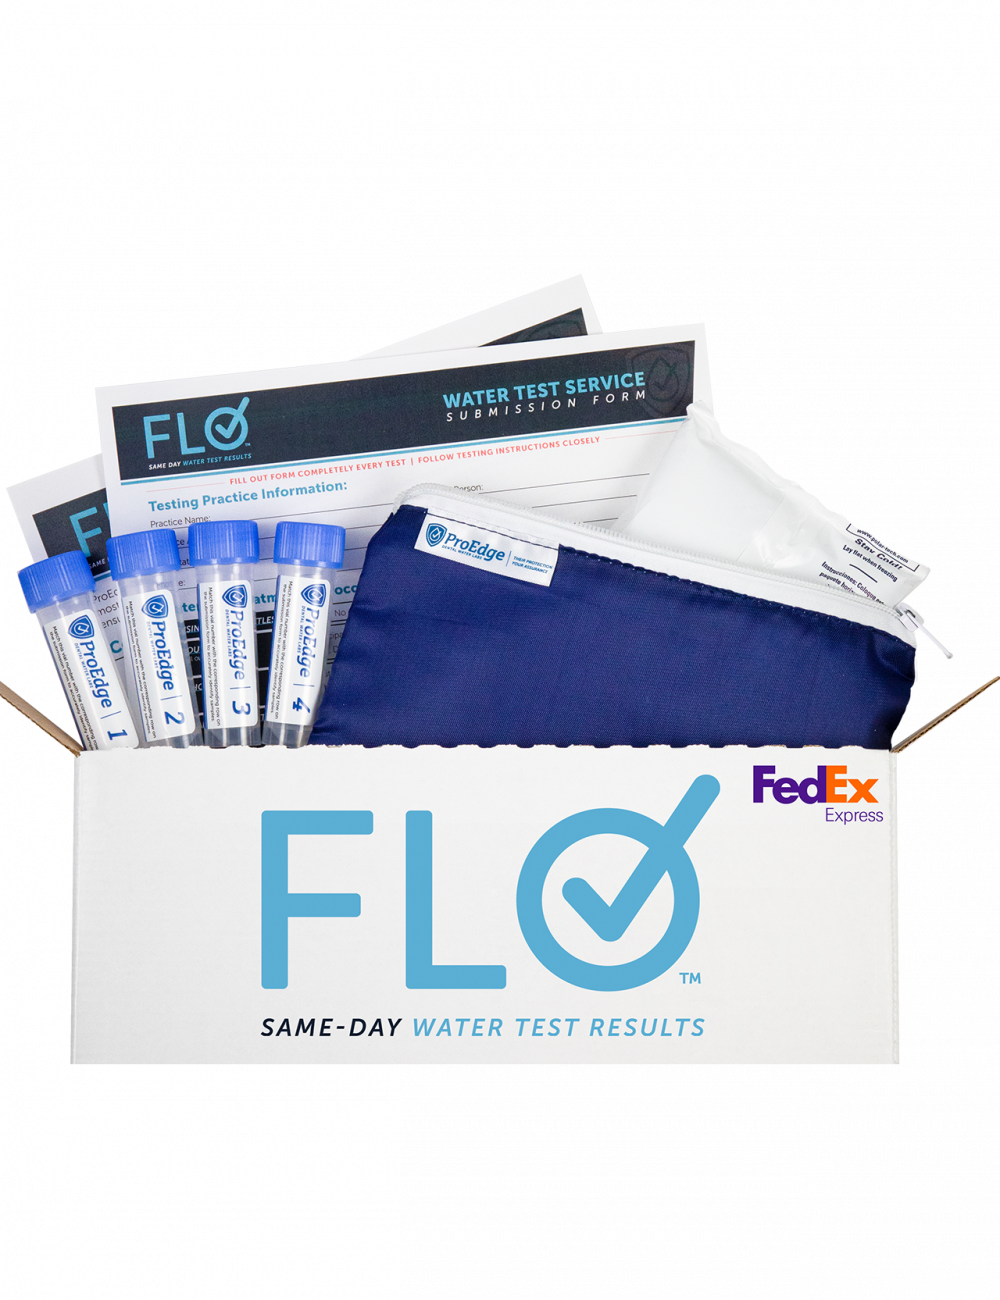 A flo water testing kit